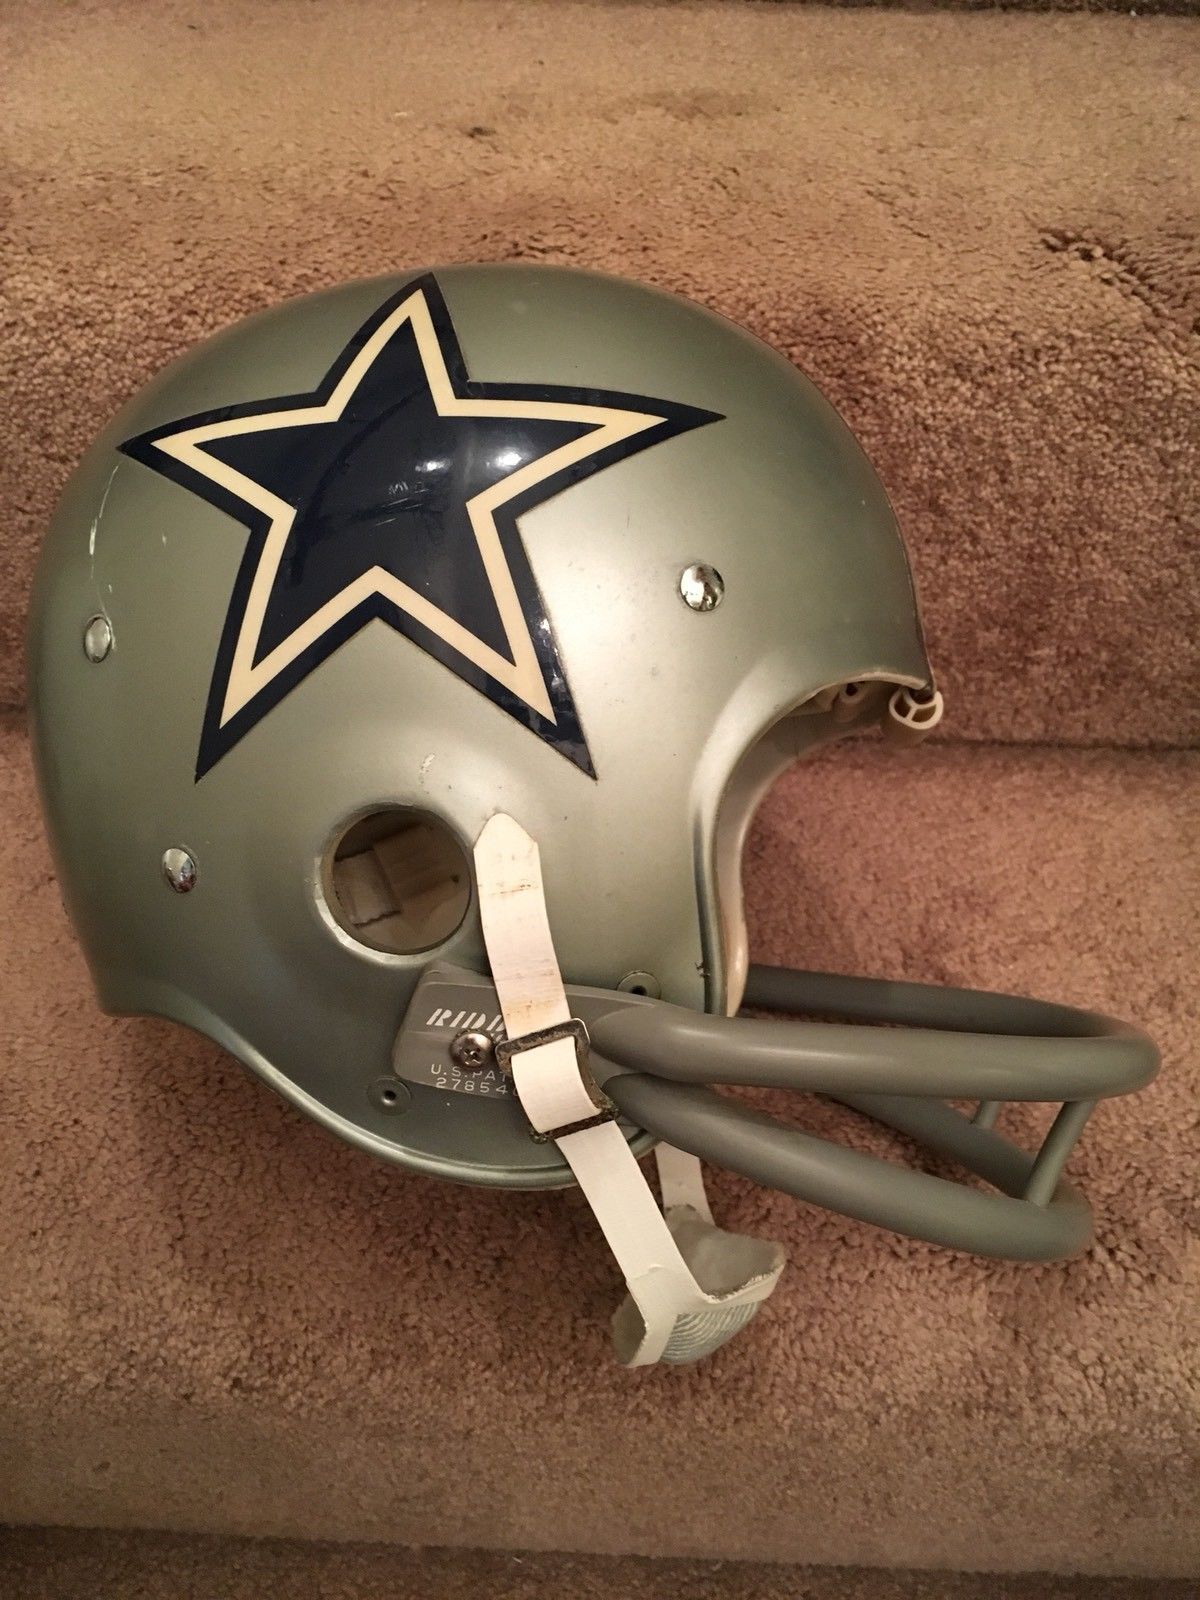 Original Authentic Vintage NFL Riddell Kra-Lite Game Football Helmets circa 1960-1970: Vintage Riddell Kra-Lite TK2 Football Helmet-1973 Dallas Cowboys Walt Garrison  WESTBROOKSPORTSCARDS   